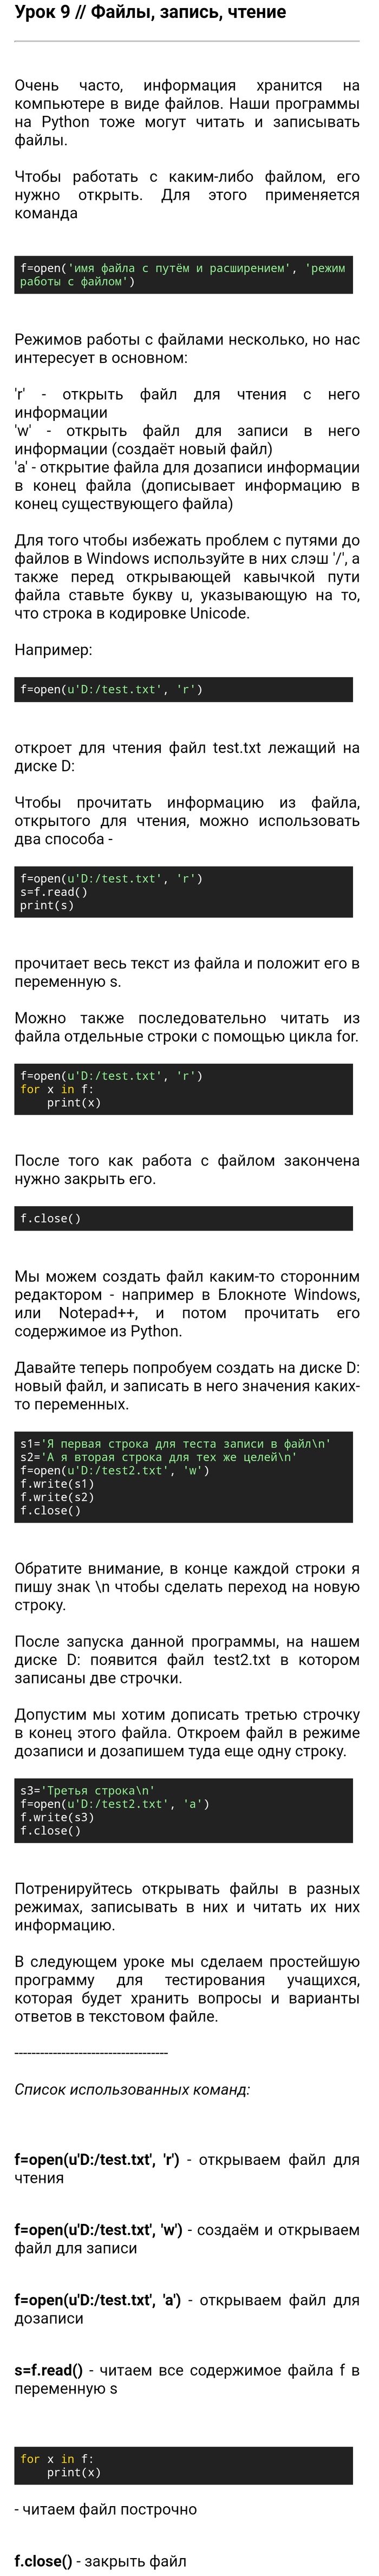 Pythono Python, , 